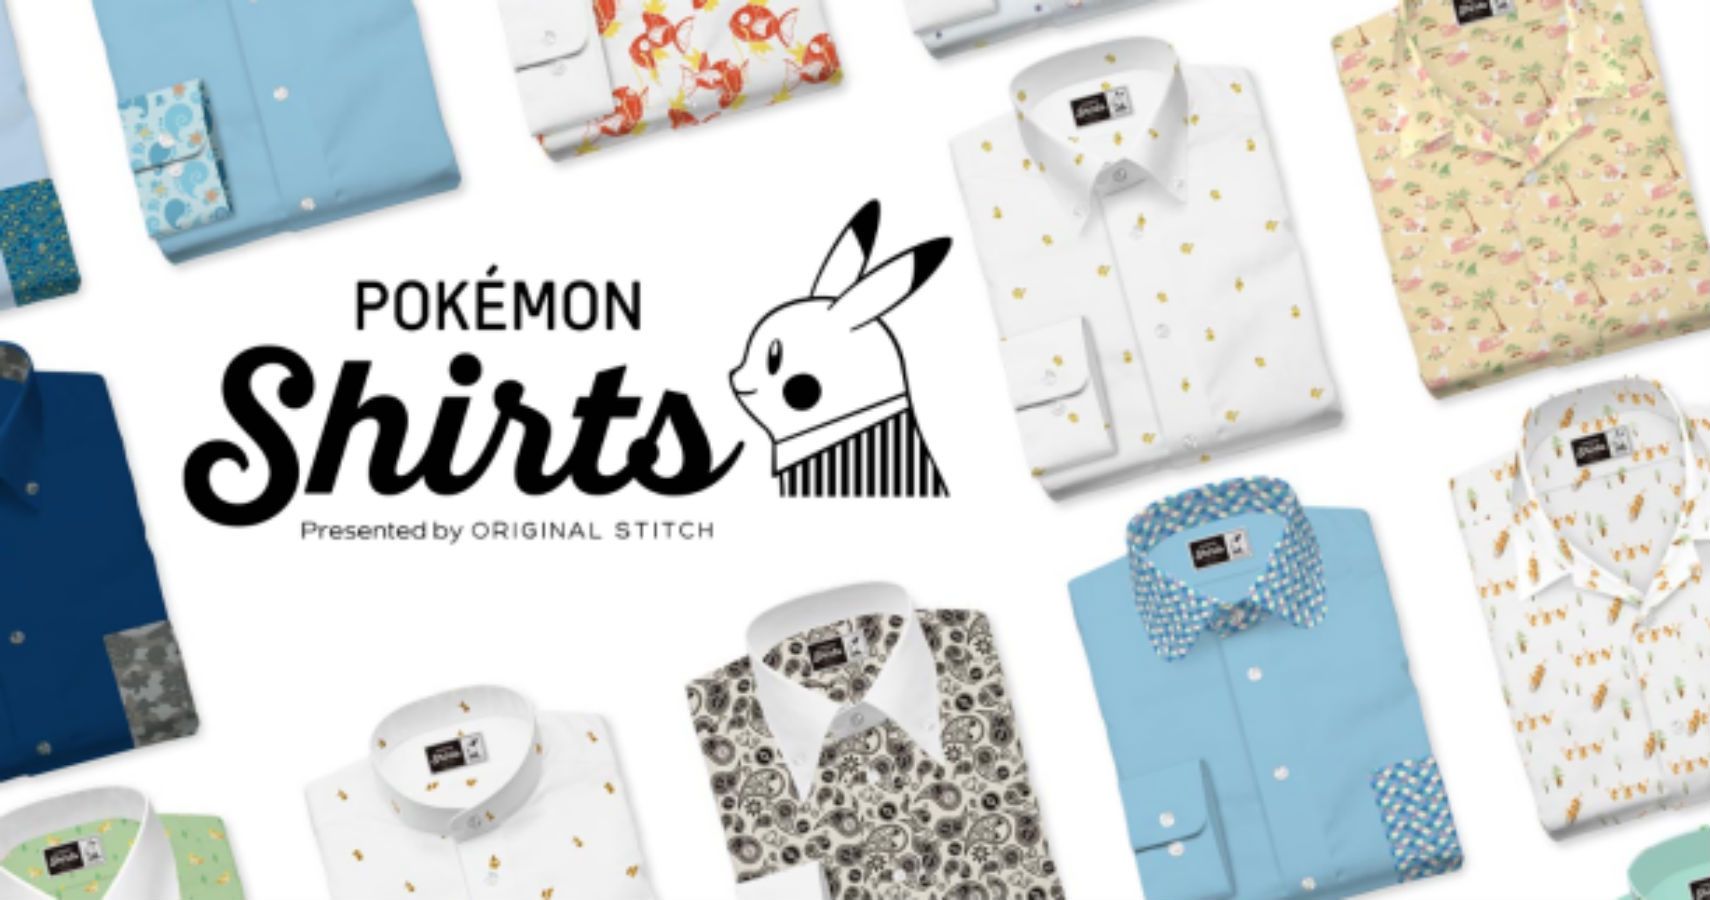 Original Stitch Pokémon Shirts Are Coming To North America And Europe